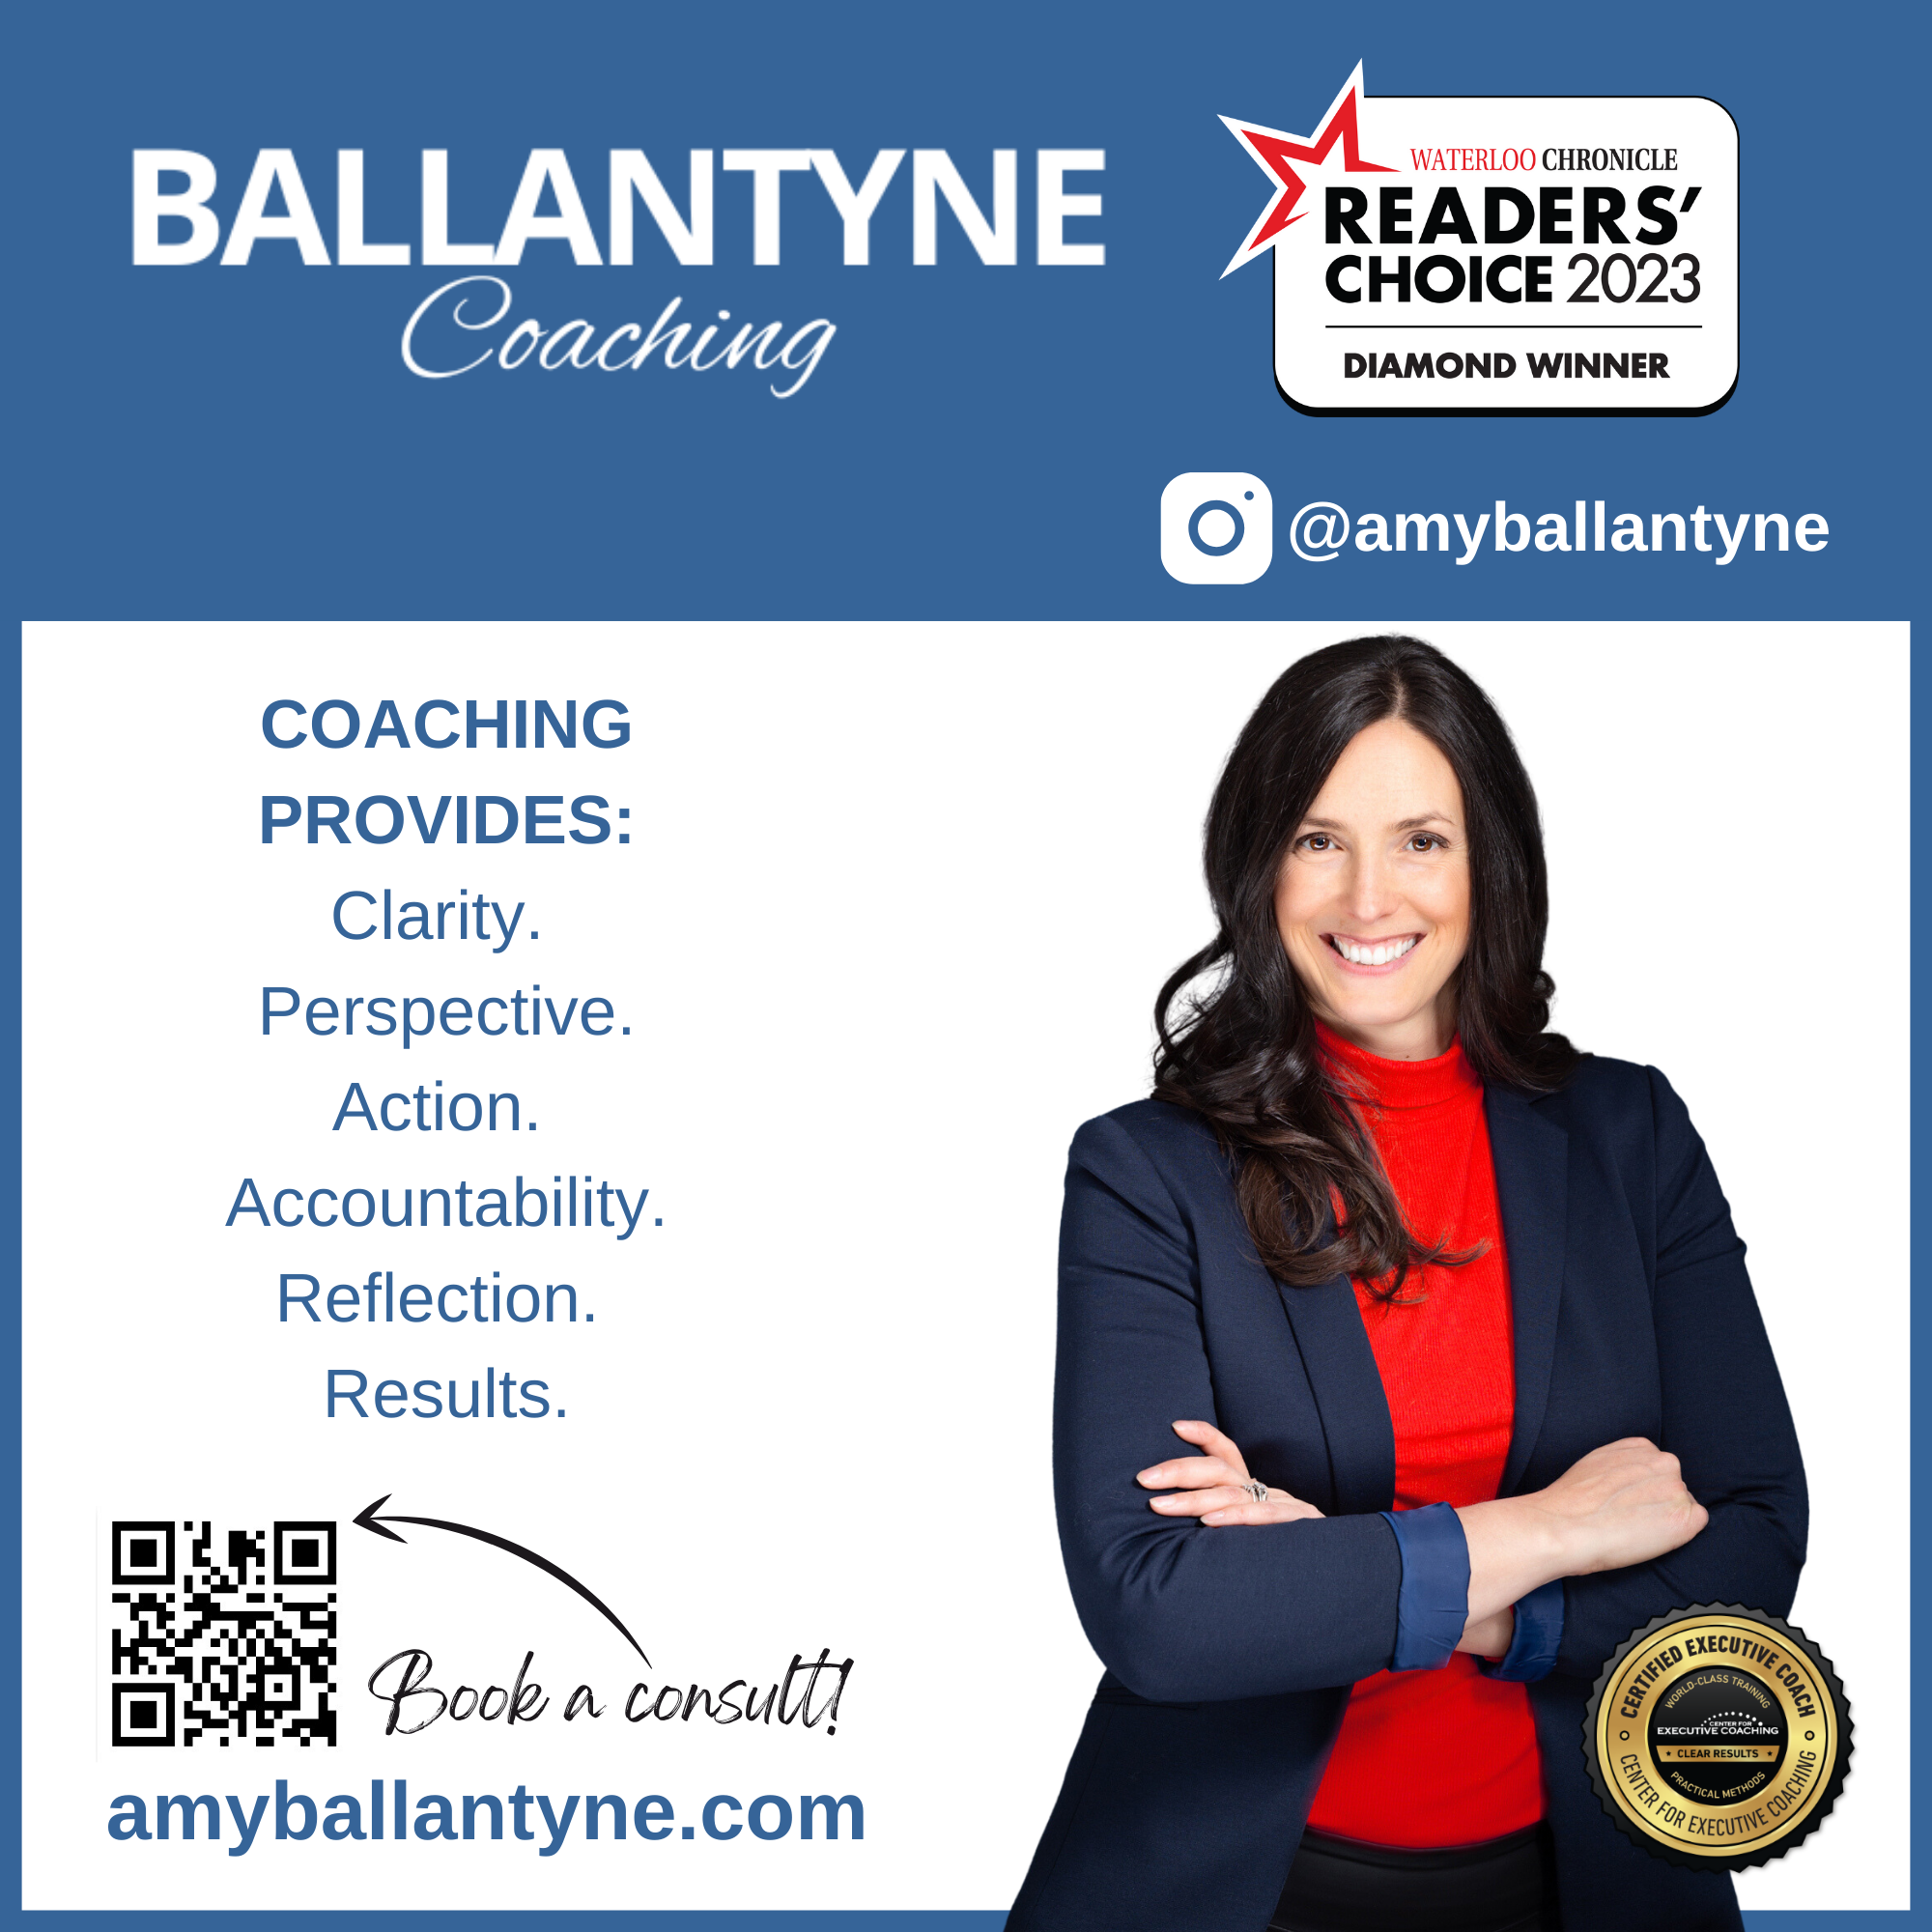 Ballantyne Coaching